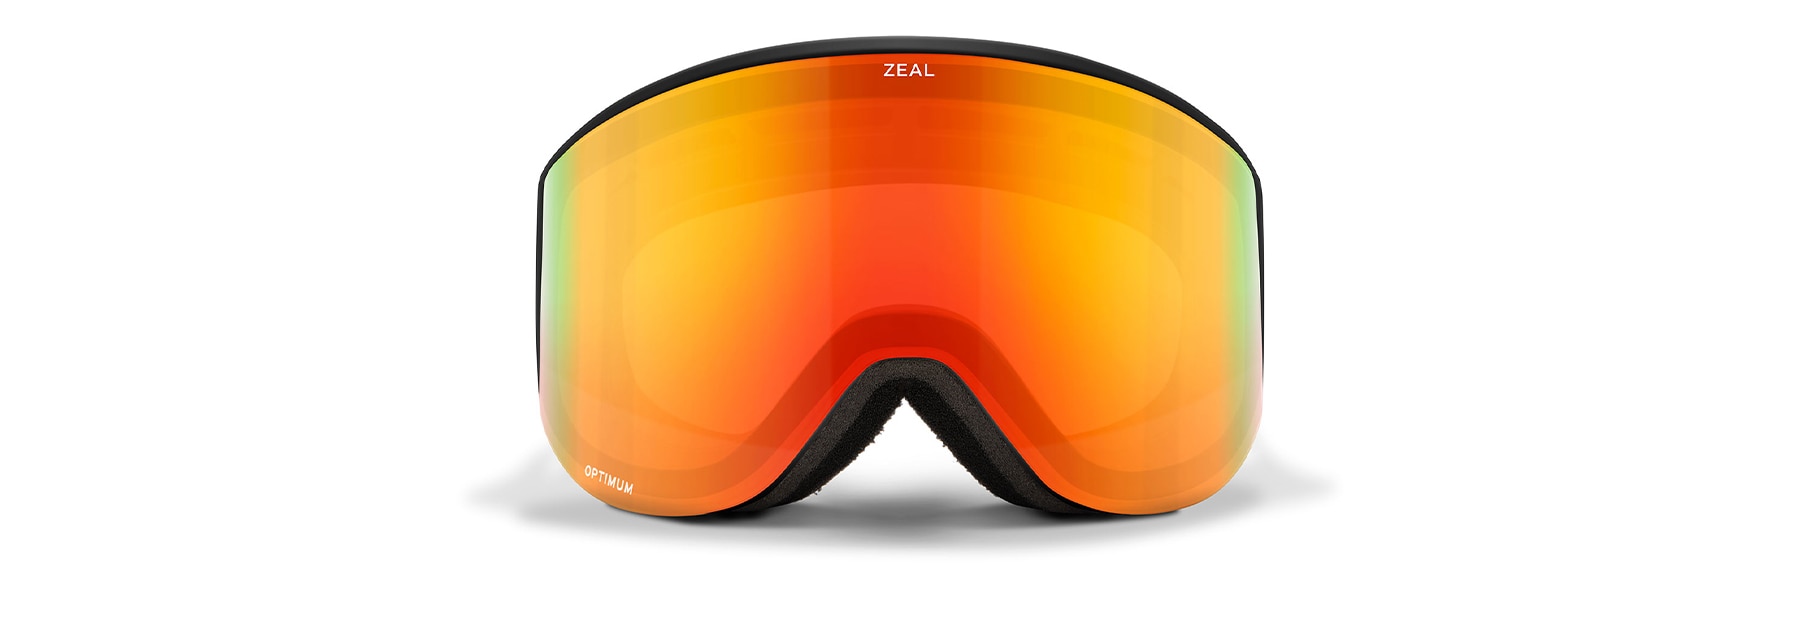 Shop BEACON (Z1768) Goggles by Zeal | Zeal Optics